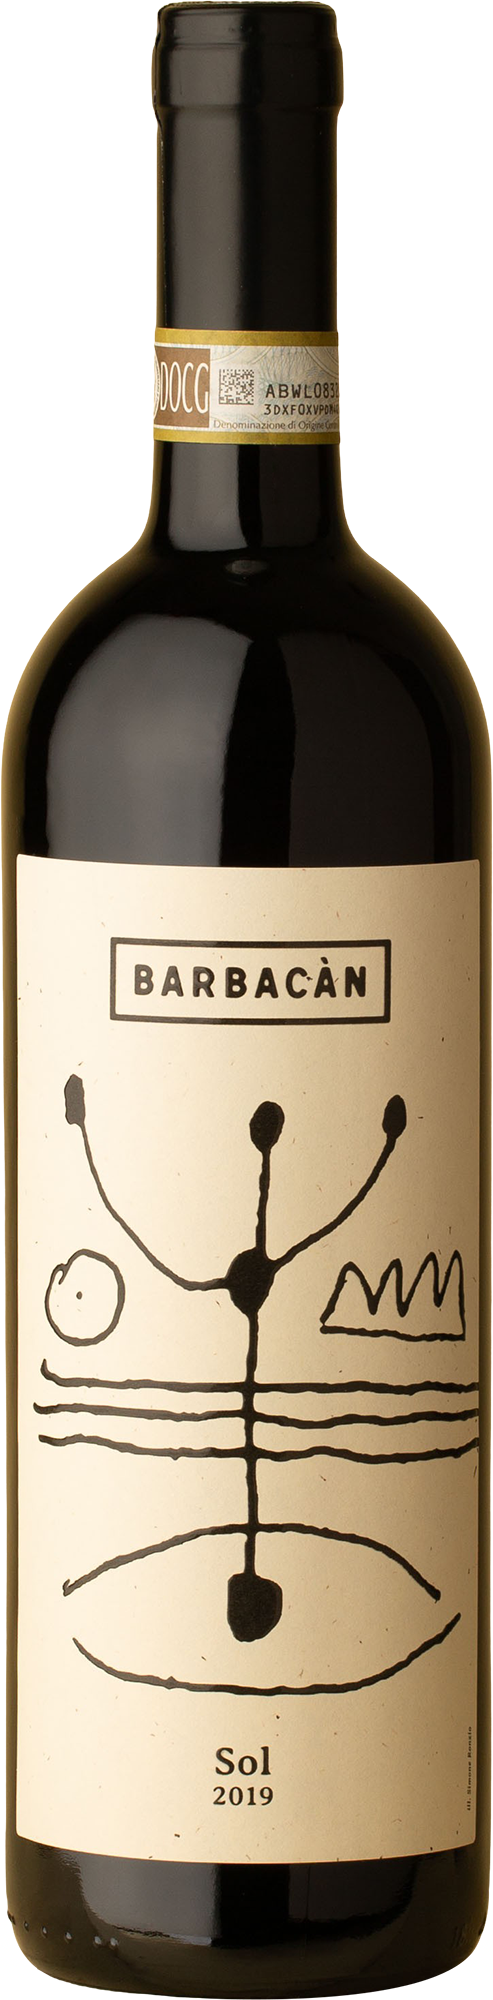 Barbacan - Sol Nebbiolo 2019 Red Wine